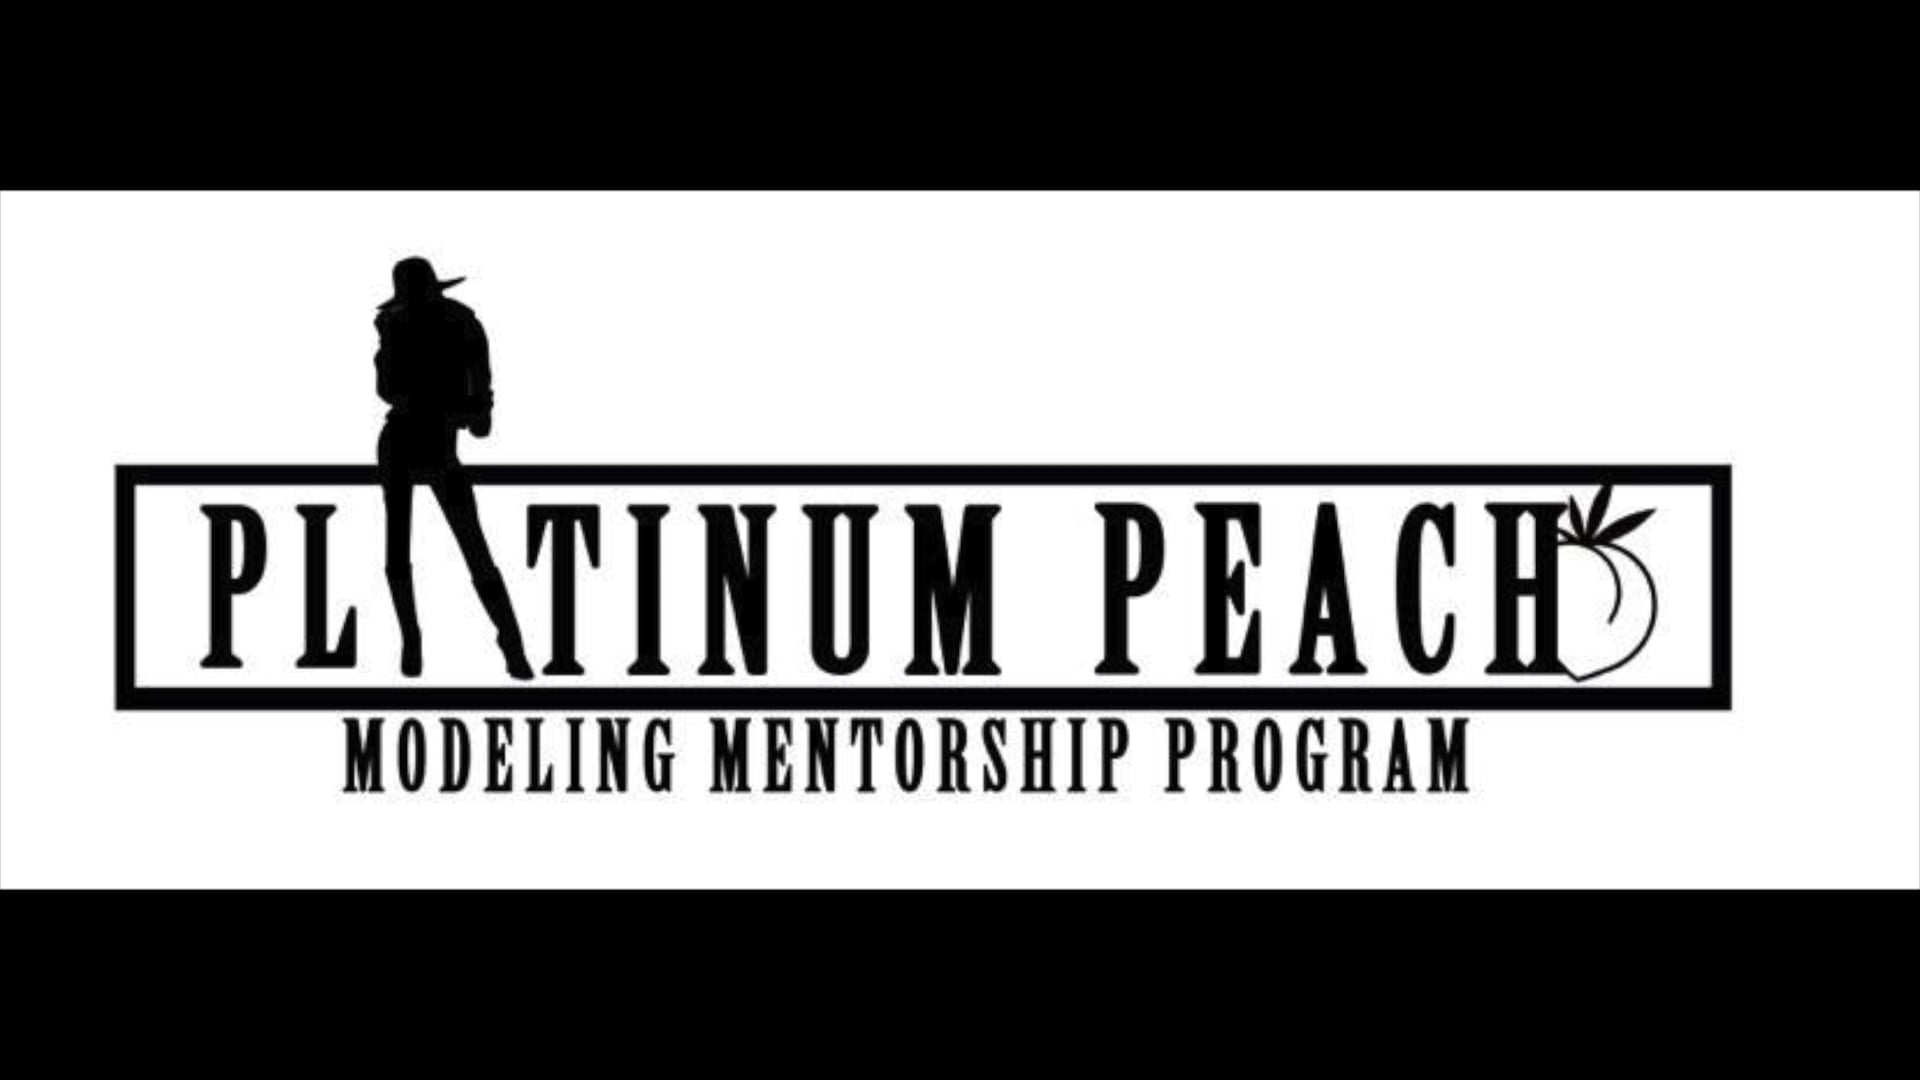 Why Platinum Peach Modeling Mentorship?